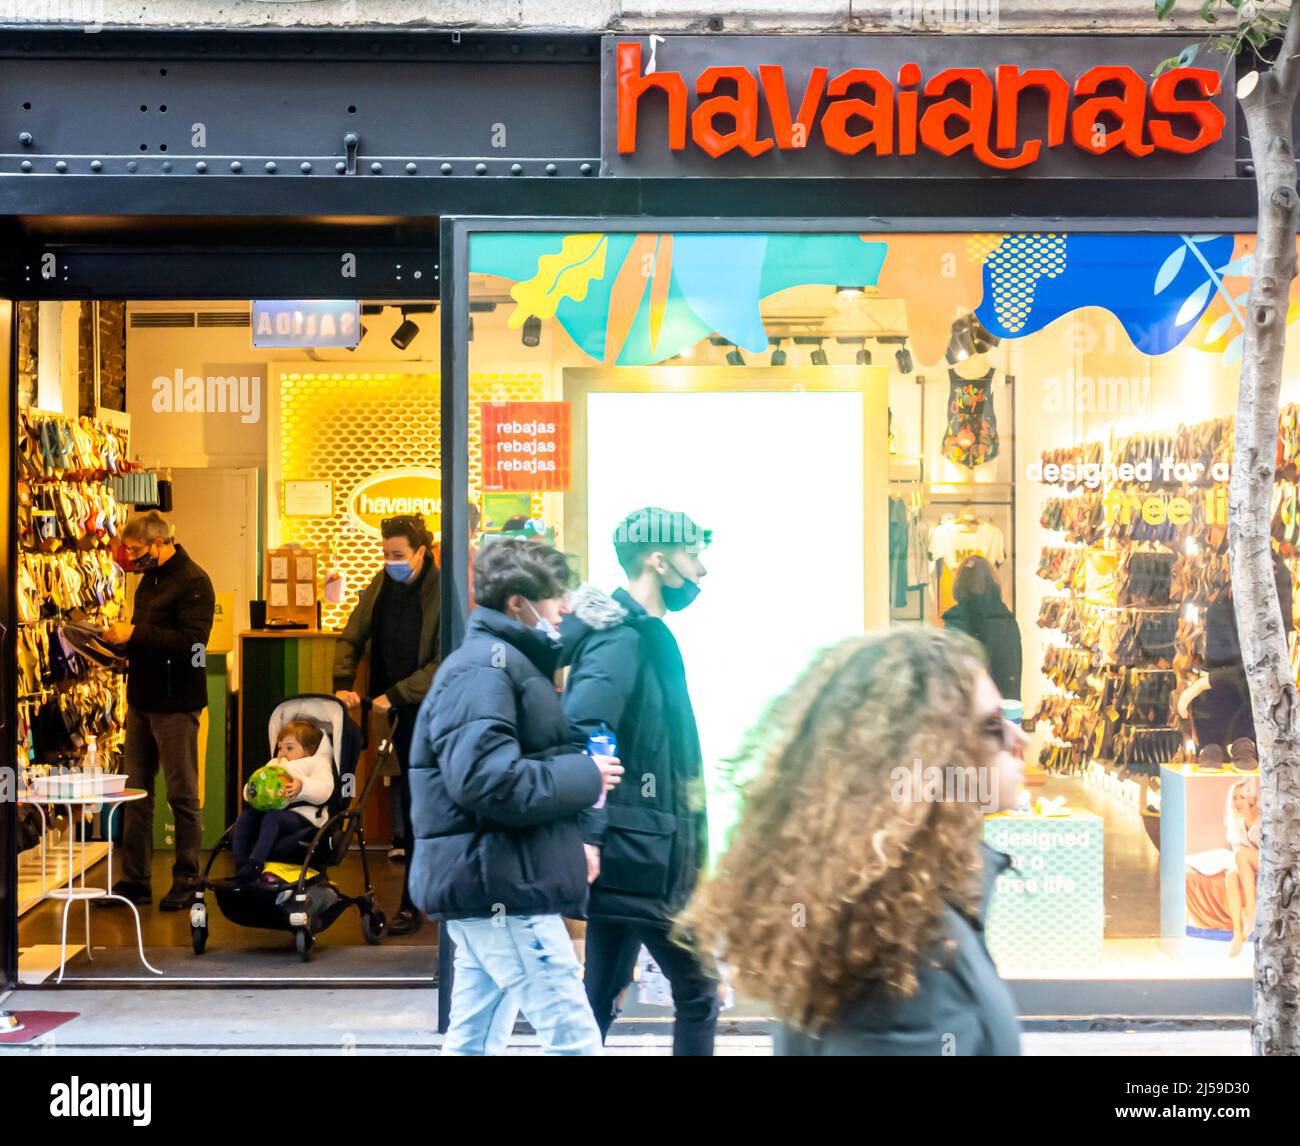 HAVAIANAS Fuencarral. Shoe store in Malasana, Madrid, Spain Stock Photo -  Alamy